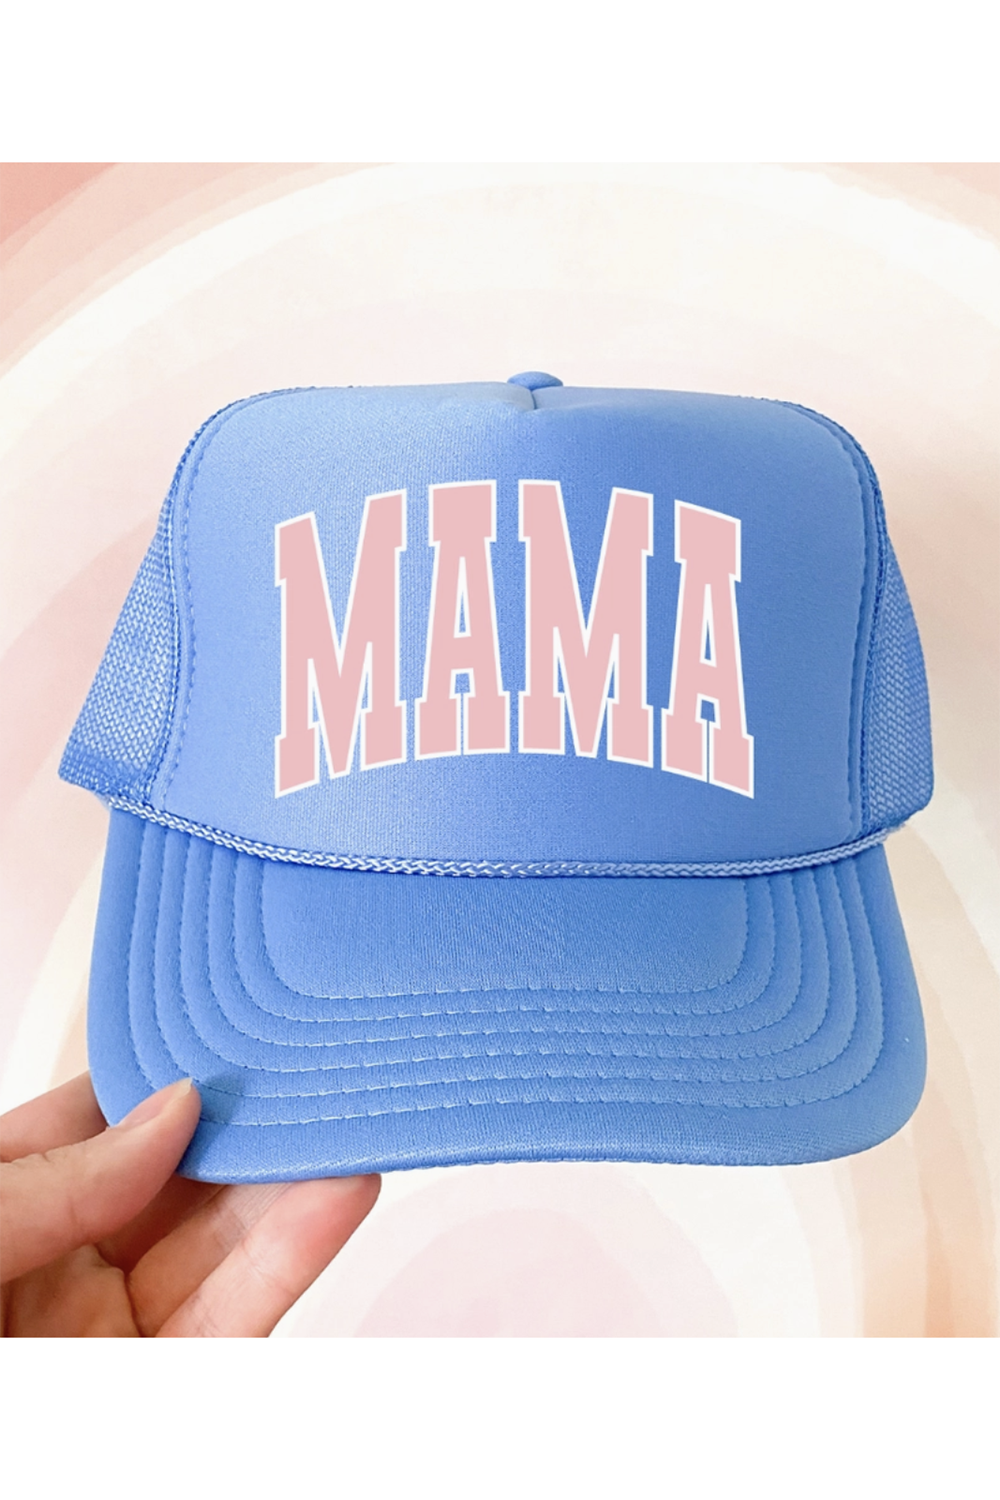 Mama Trucker Hat - Baby Blue